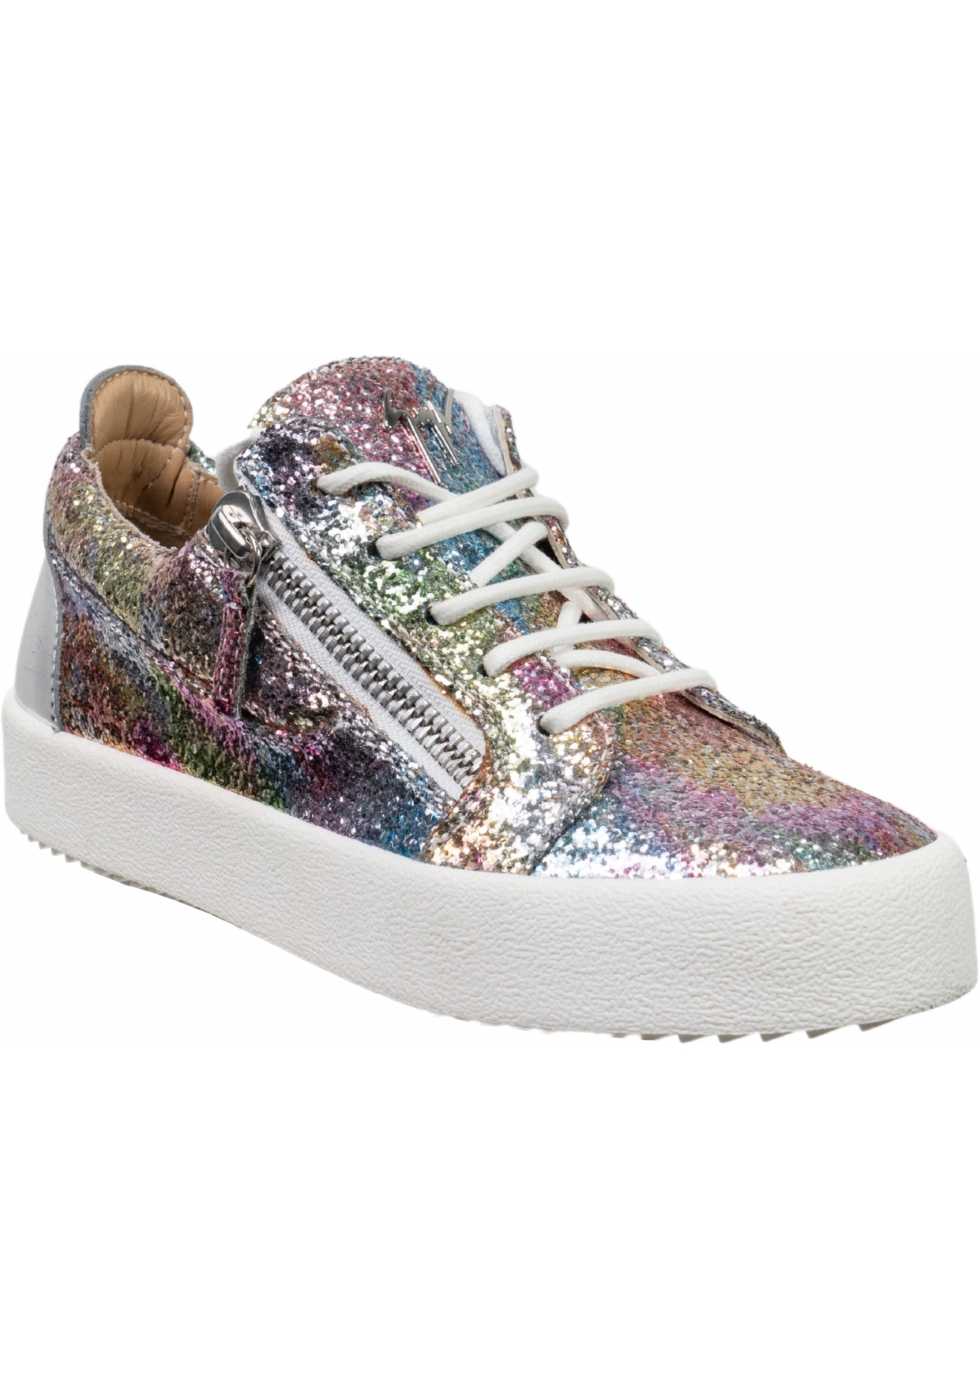 Blåt mærke Egypten forkorte Giuseppe Zanotti Women's multicolor glitter sneakers with laces and zippers  - Italian Boutique